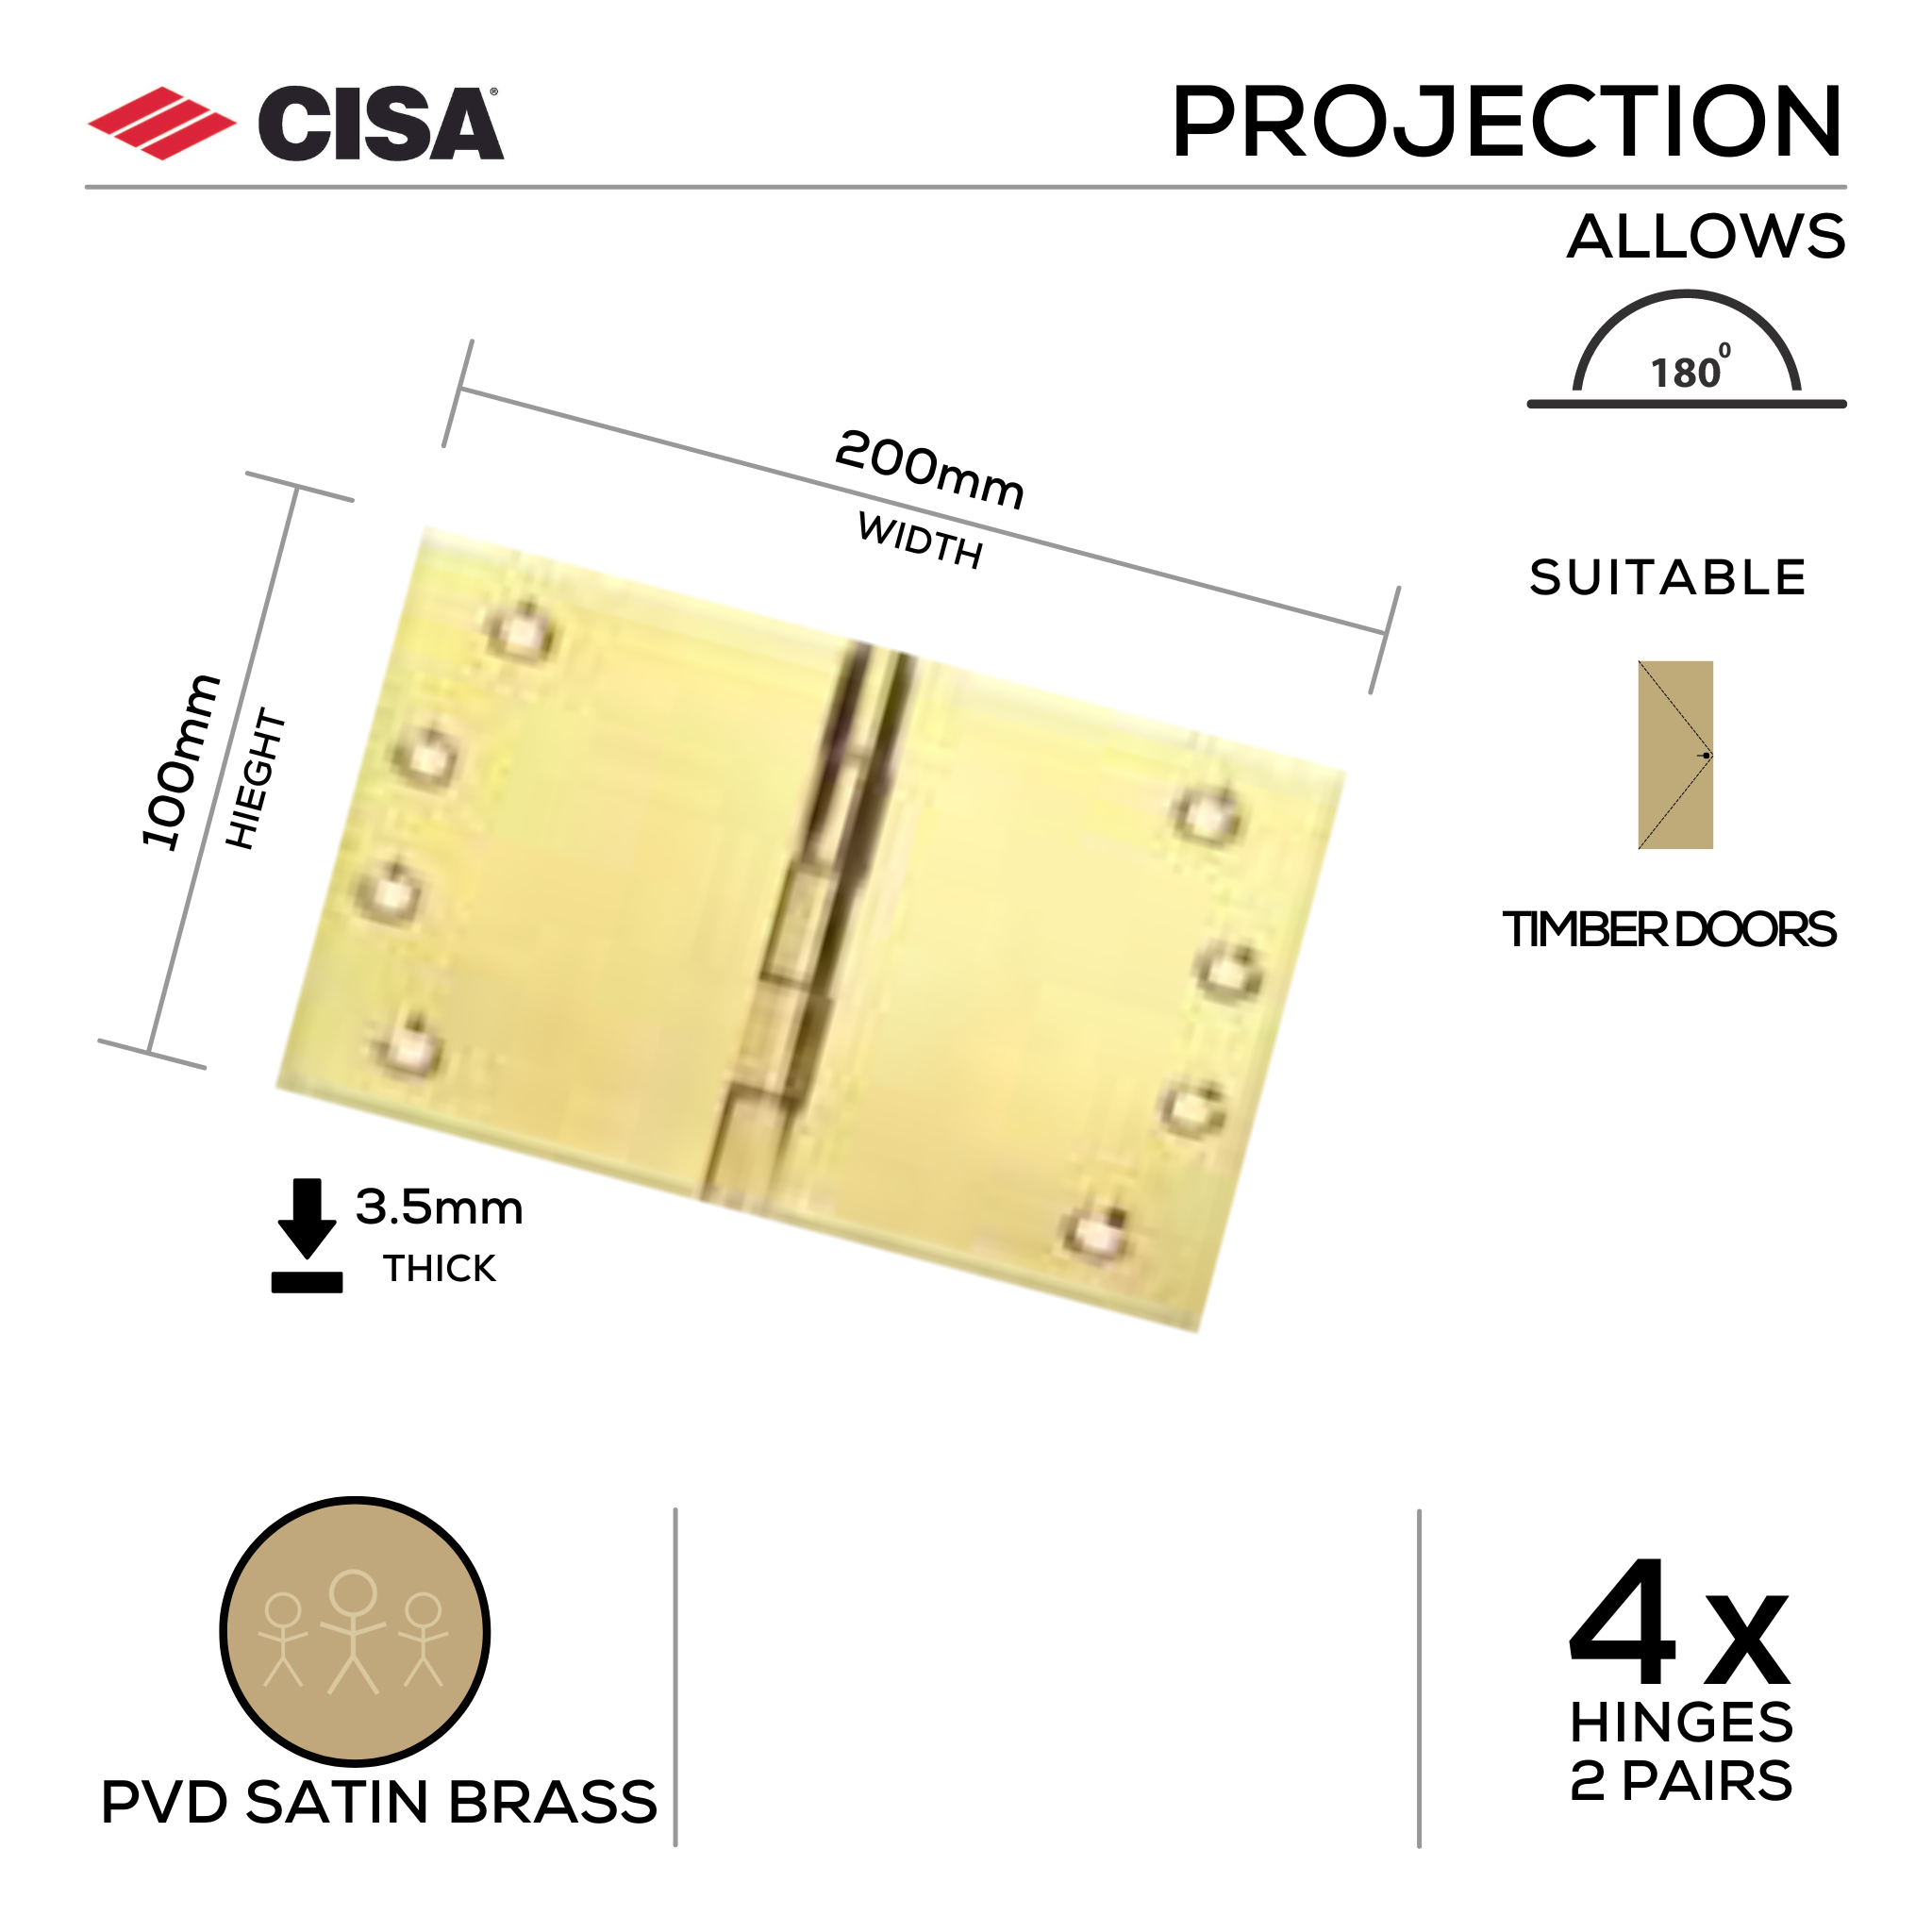 FH200X3-SBR, Projection Hinge, 2 x Hinges (1 Pair), 100mm (h) x 200mm (w) x 3.5mm (t), Satin Brass, CISA